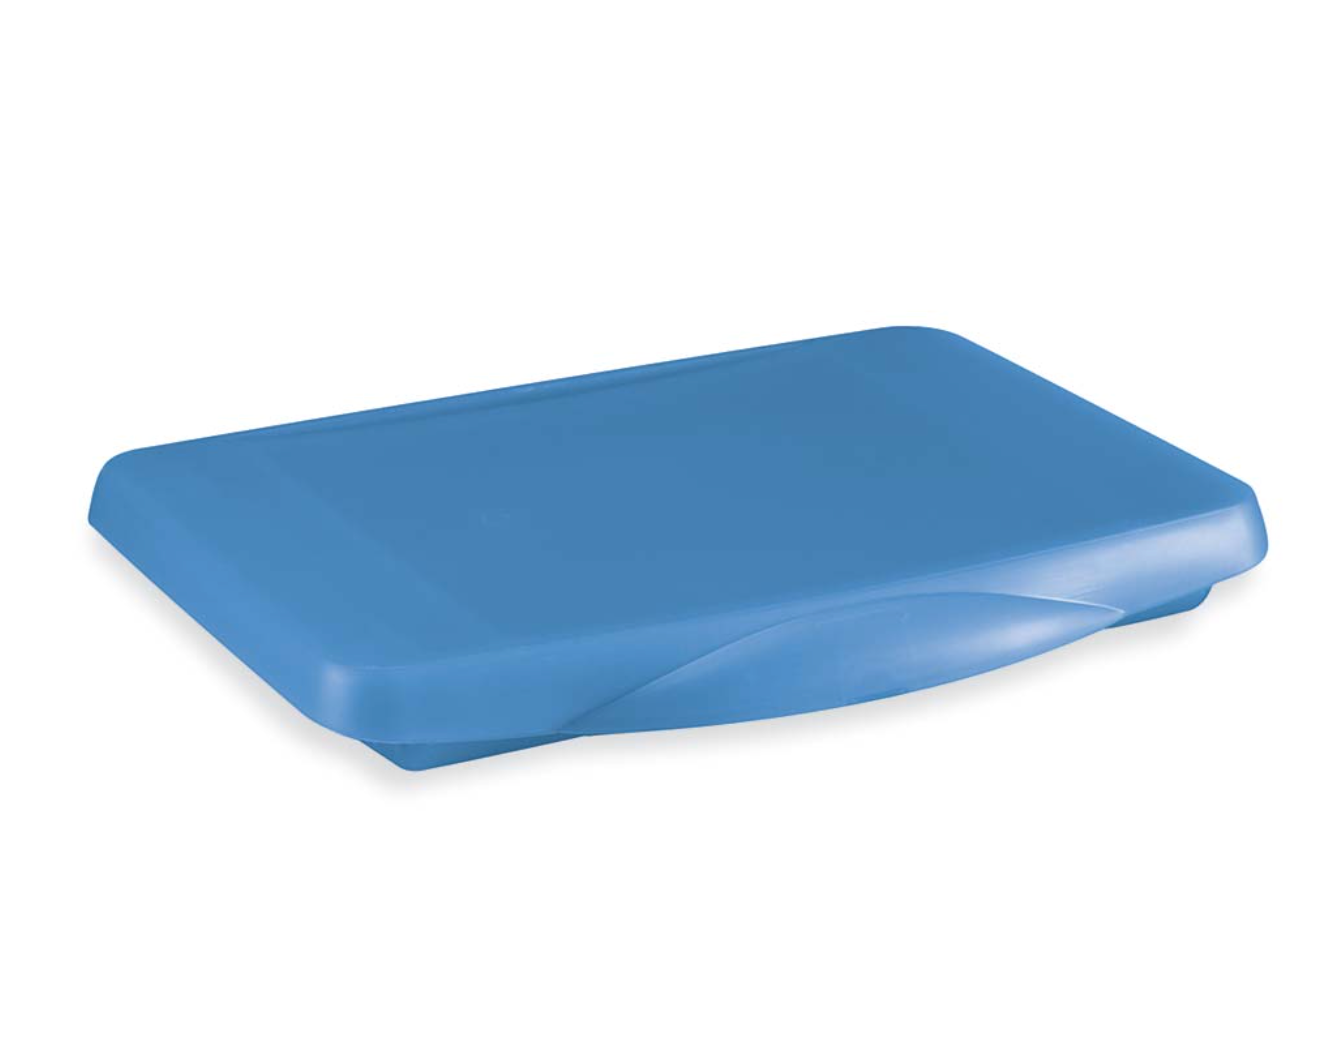 Portable Folding Lap Desk With Storage Activity Tray - Blue